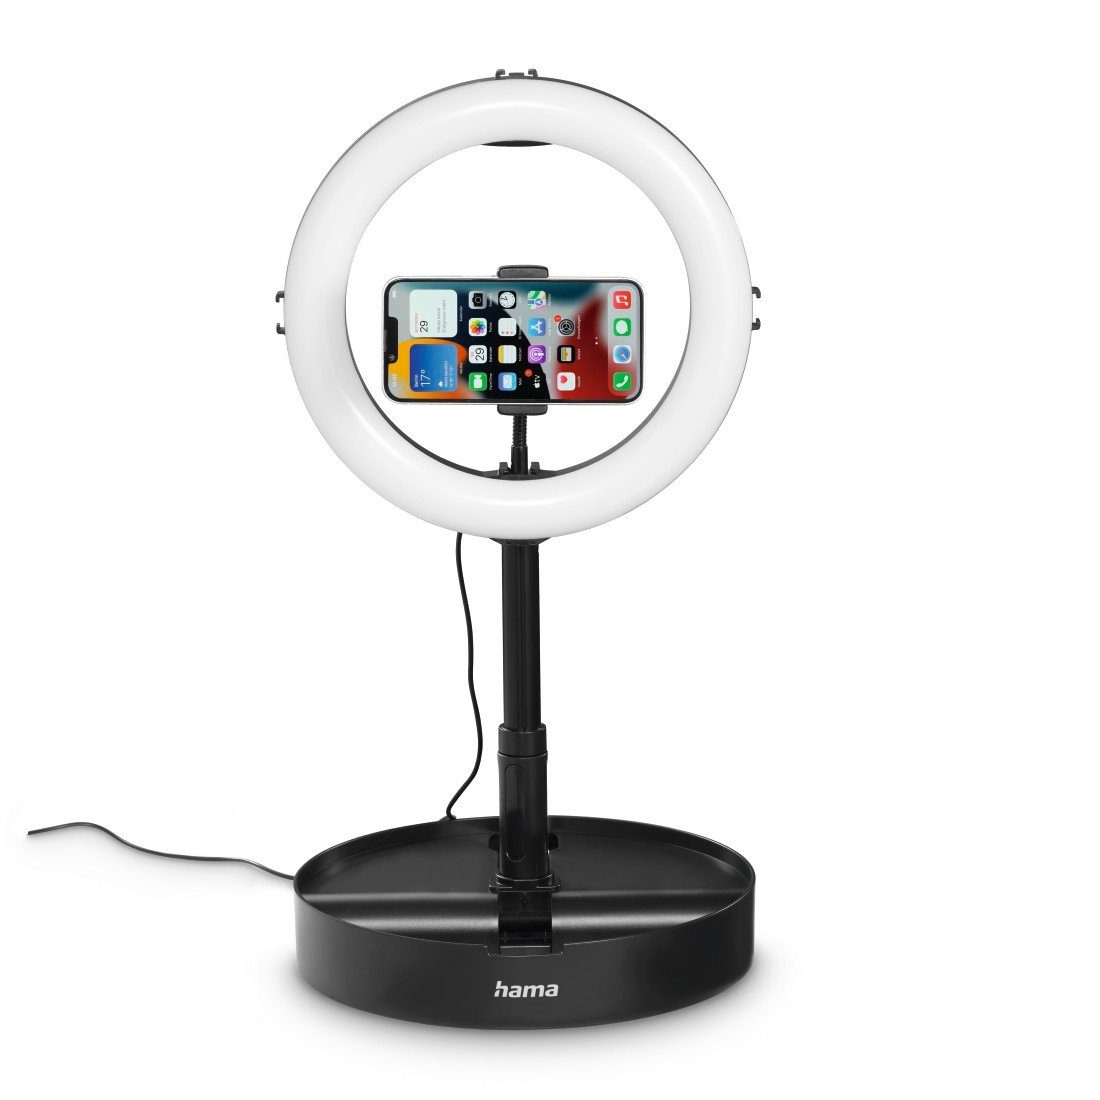 Hama Ringlicht Stativ Ringleuchte mit Mikrofon, Handy, Videokonferenz für Webcam, LED